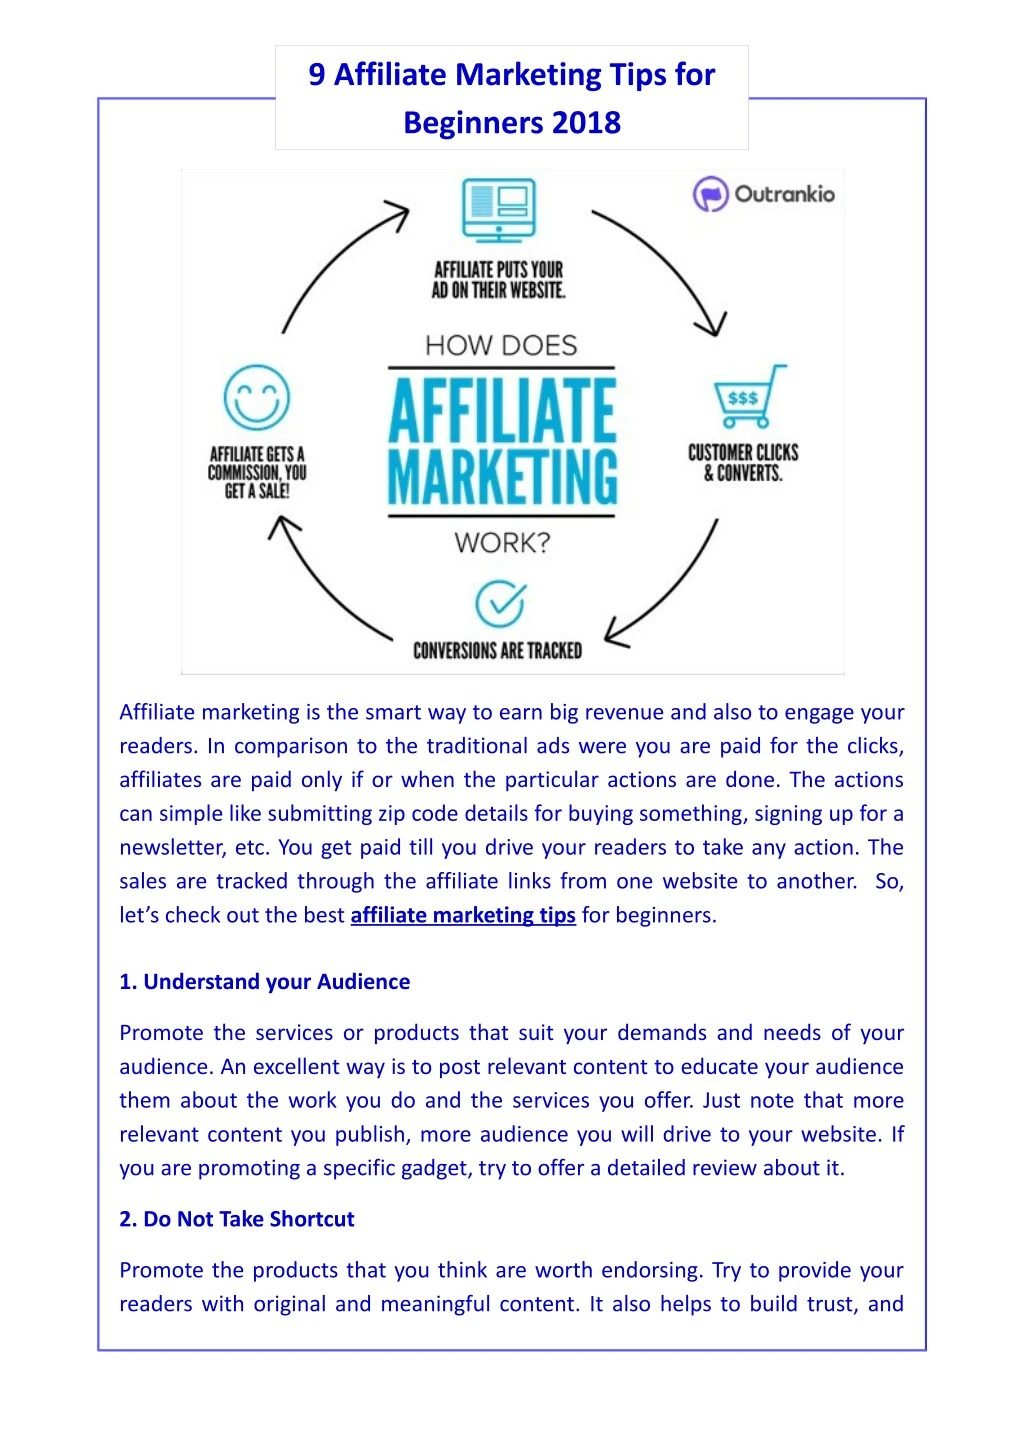 9 affiliate marketing tips for beginners 2018